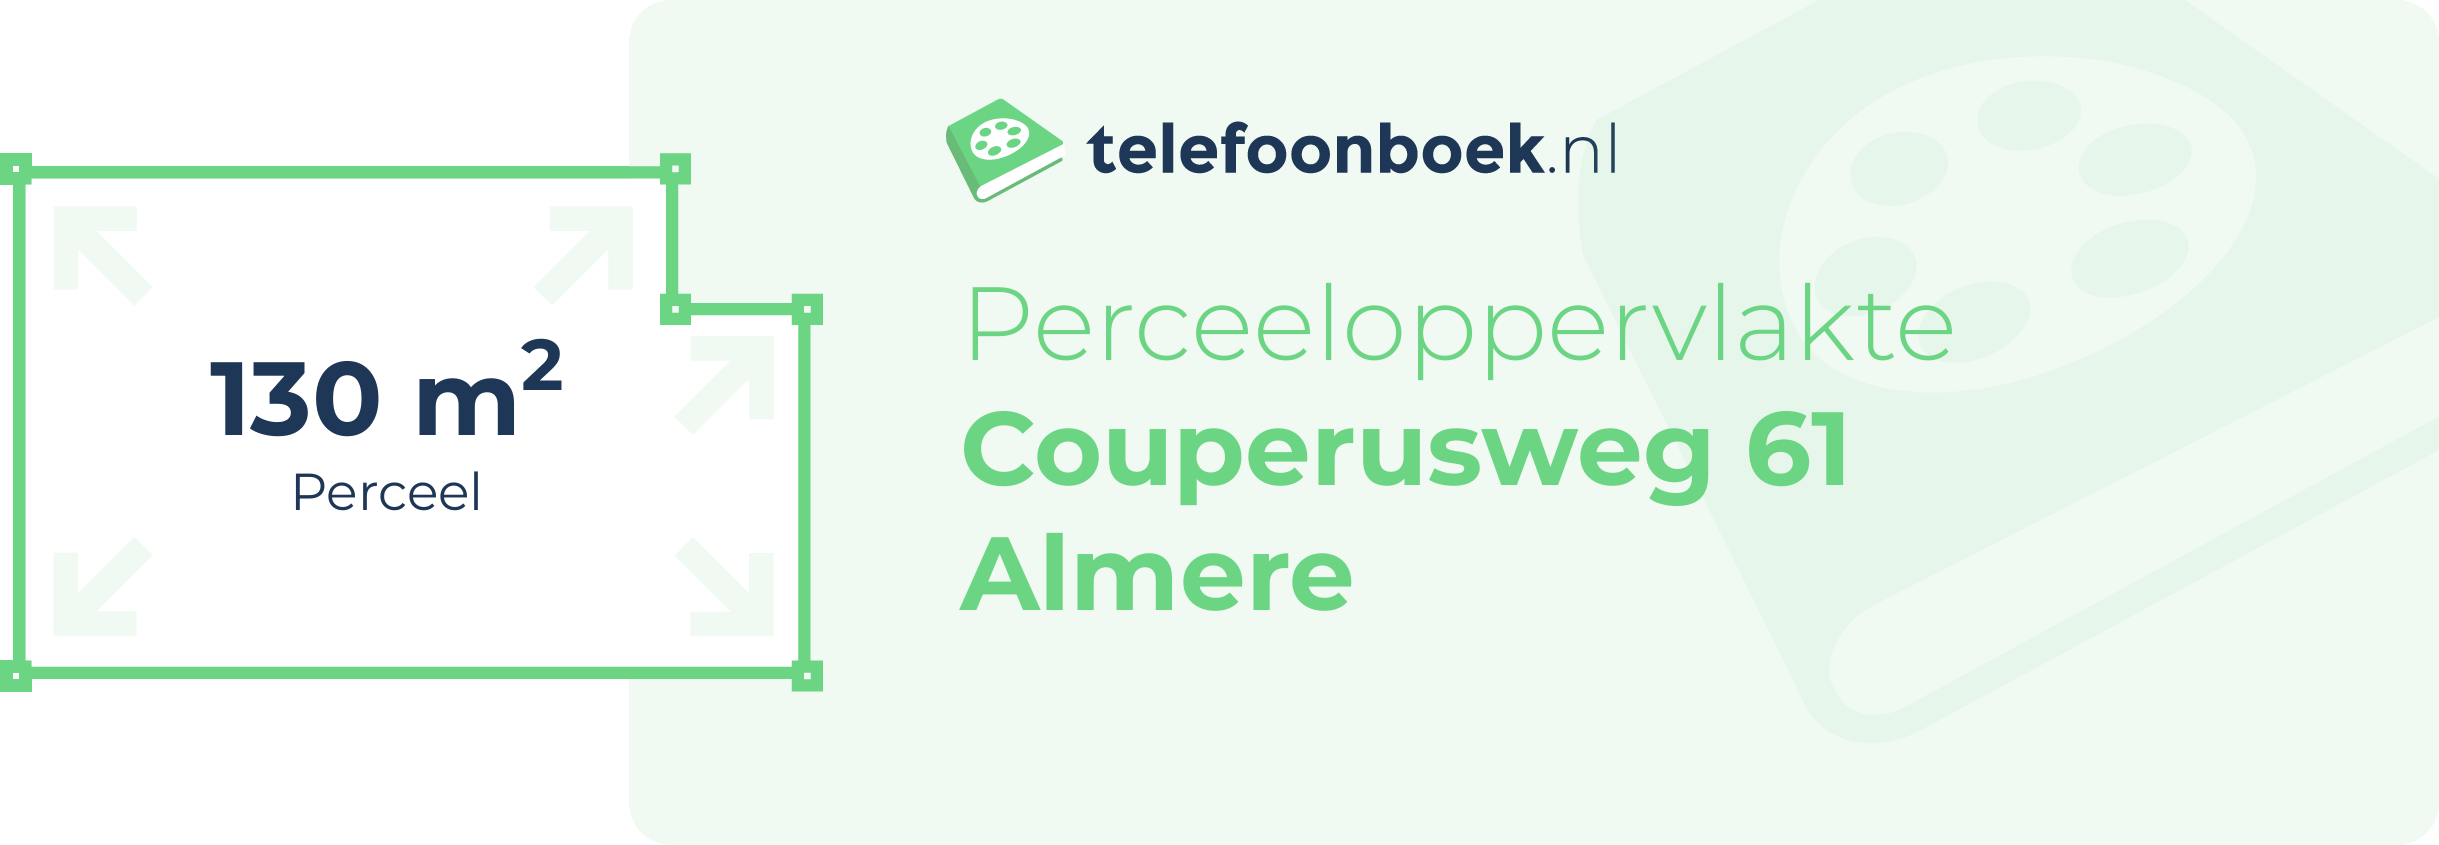 Perceeloppervlakte Couperusweg 61 Almere